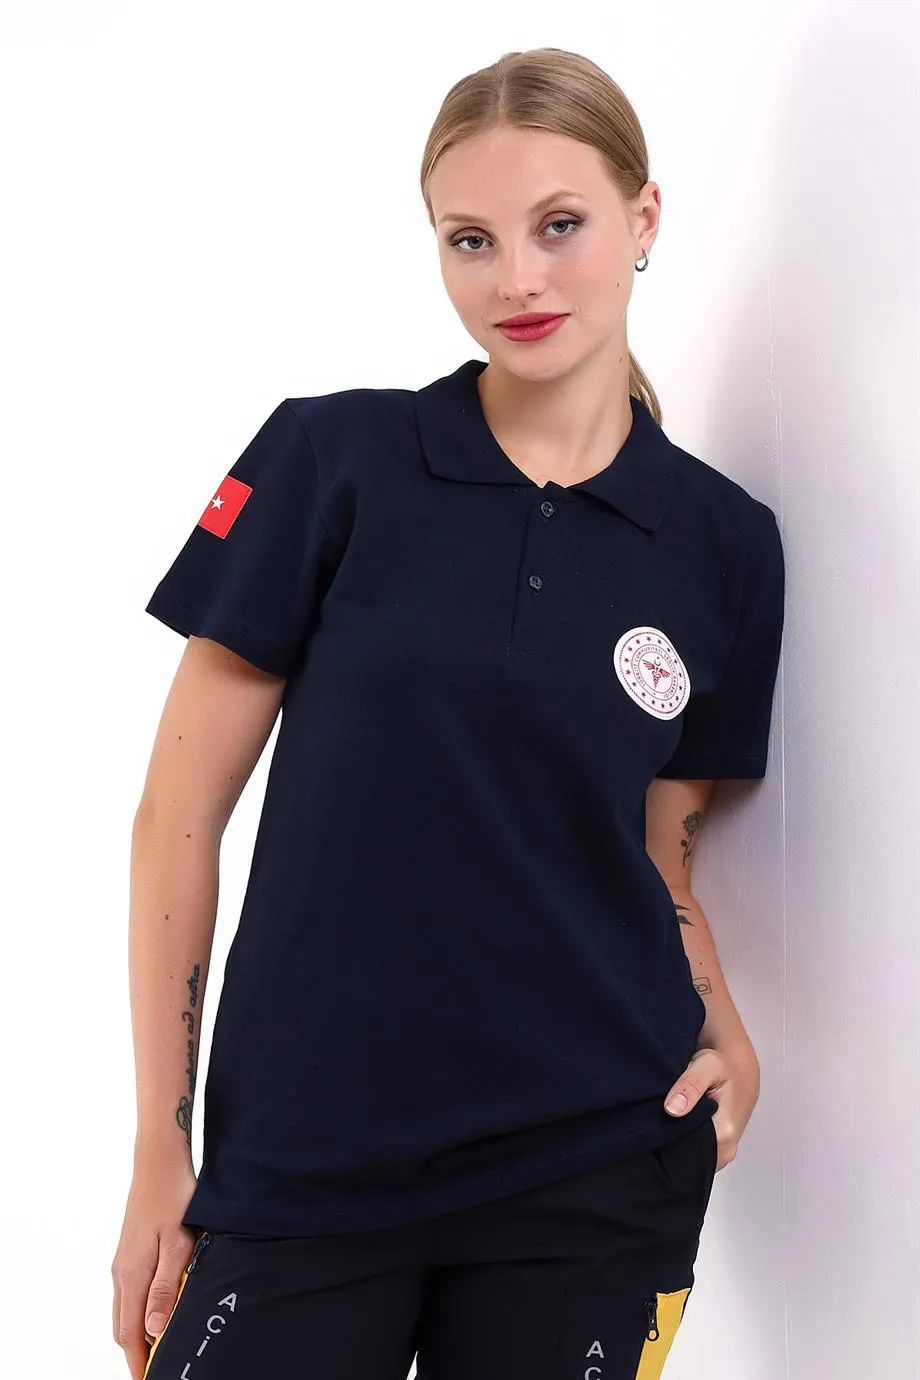 Paramedik Yakalı Unisex Tshirt Kısa Kol - Lacivert